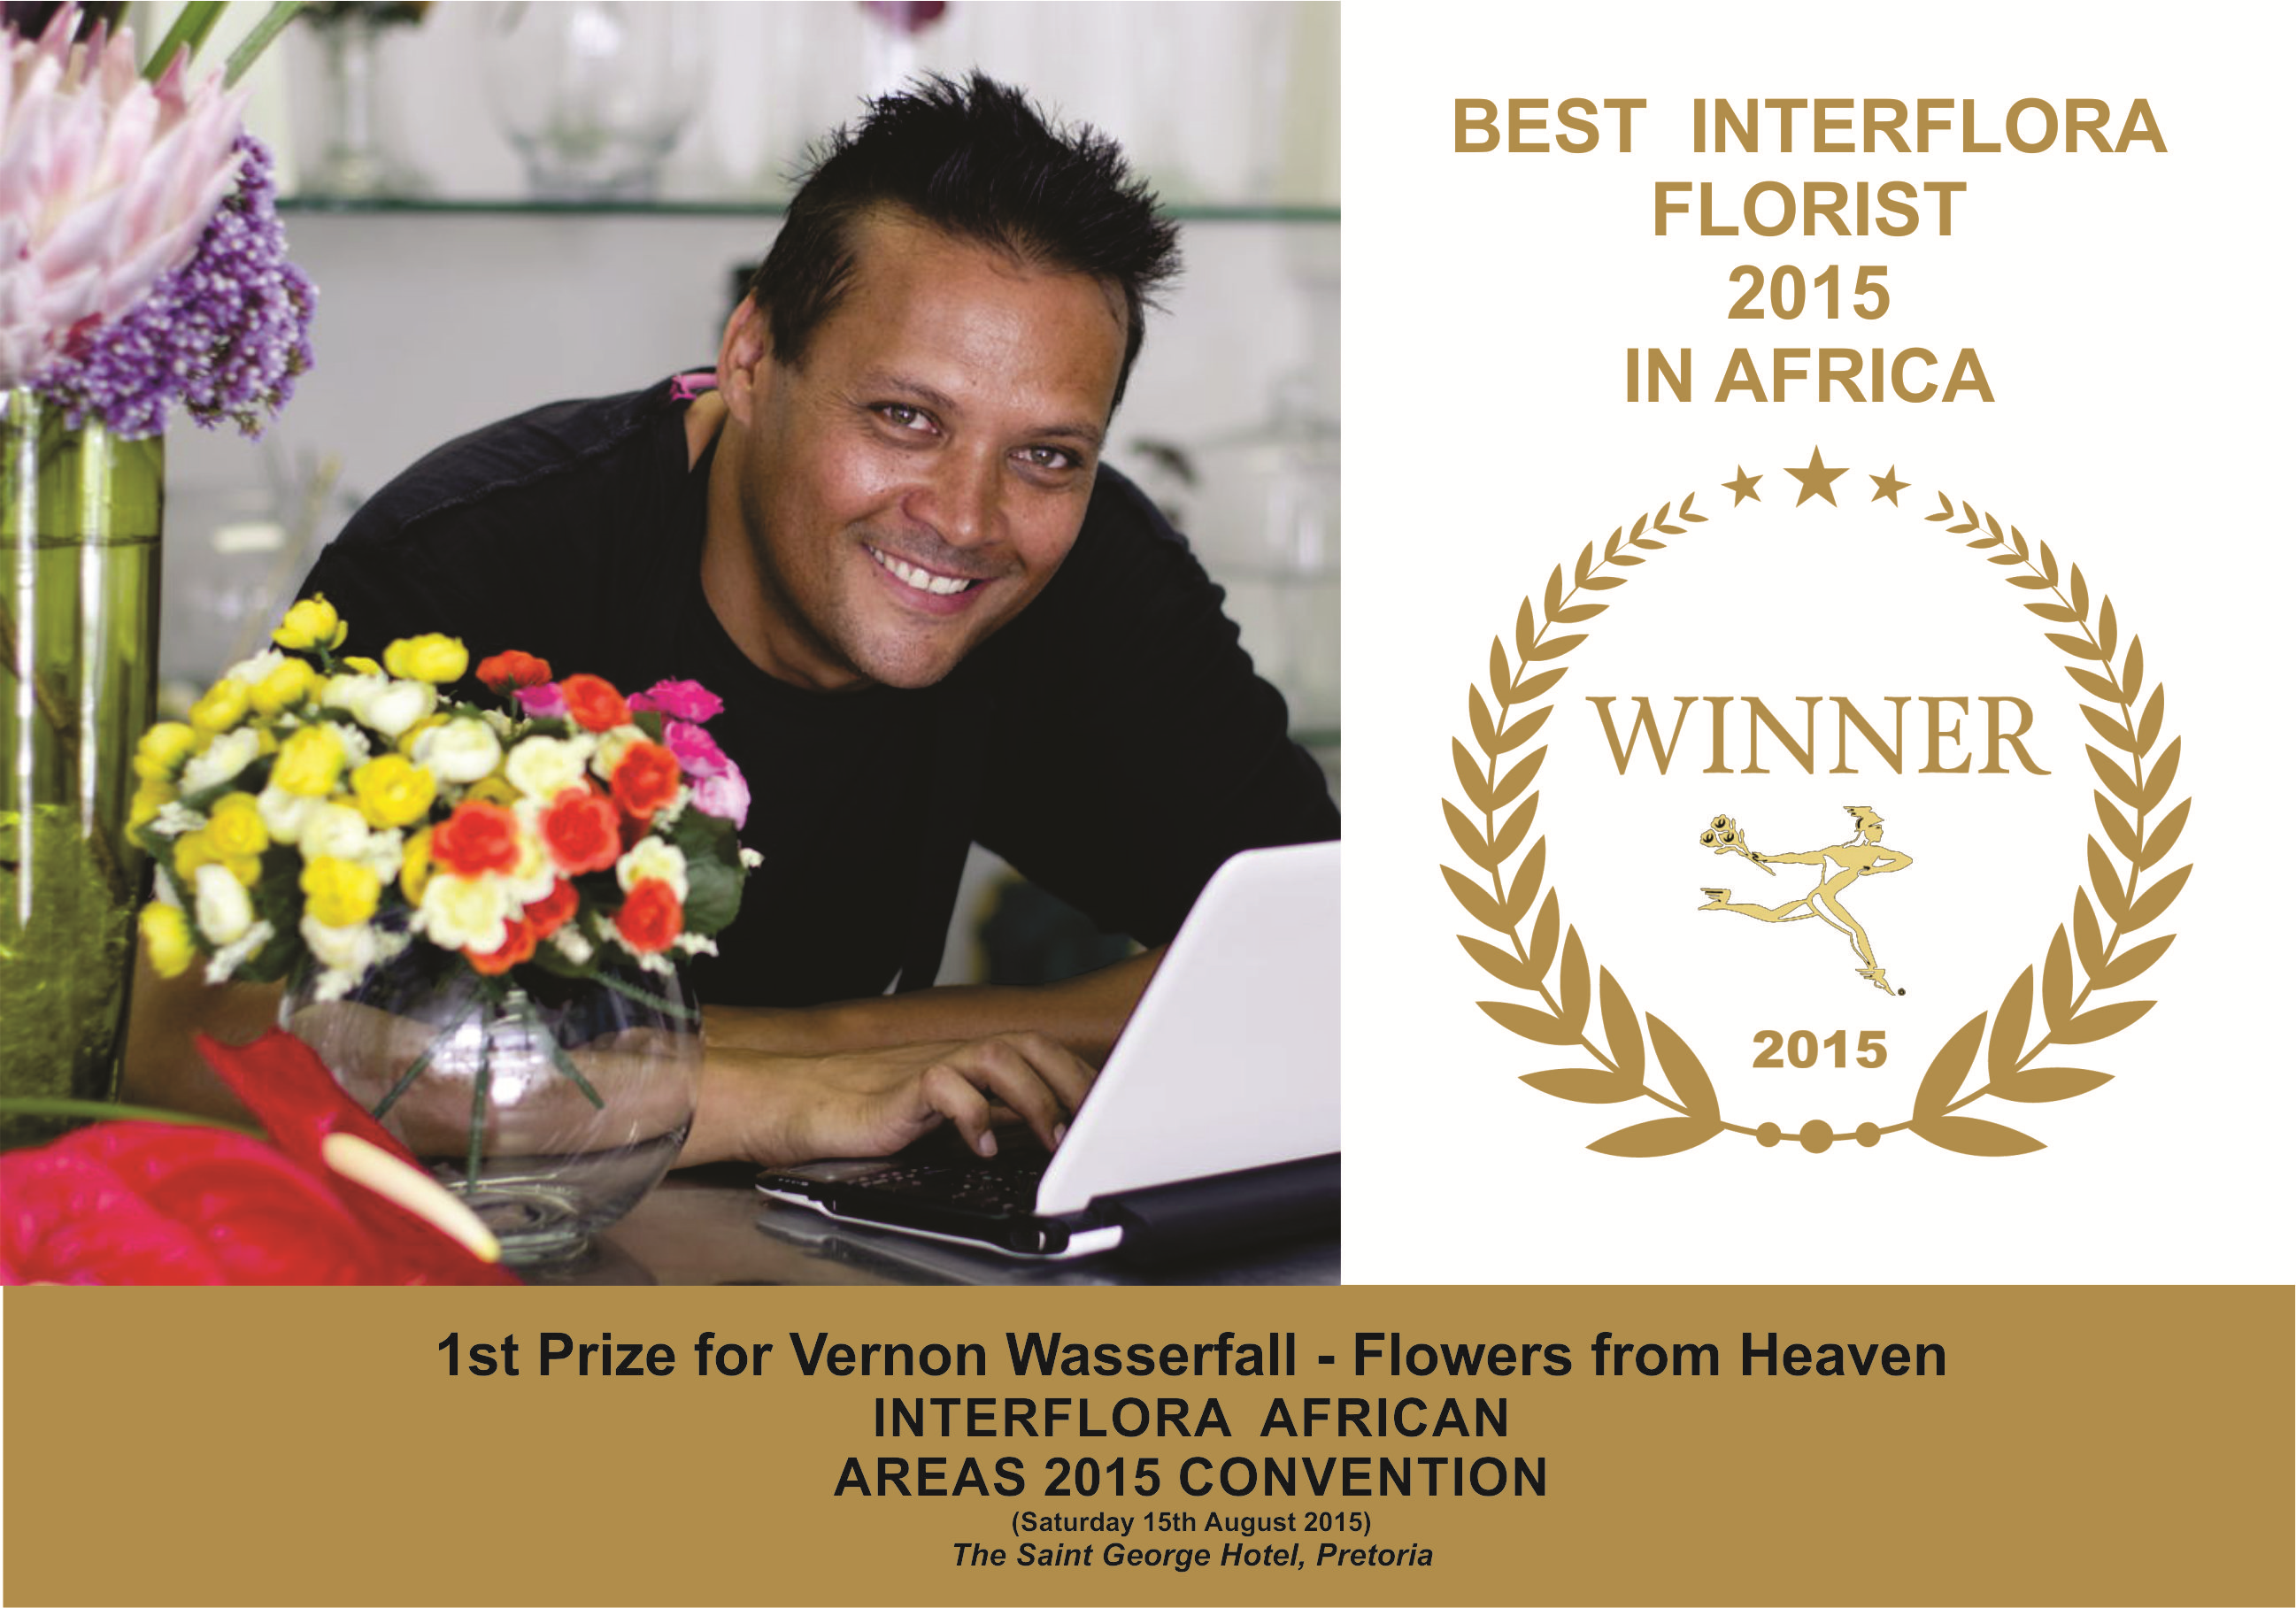 Best Florist in Africa 2015